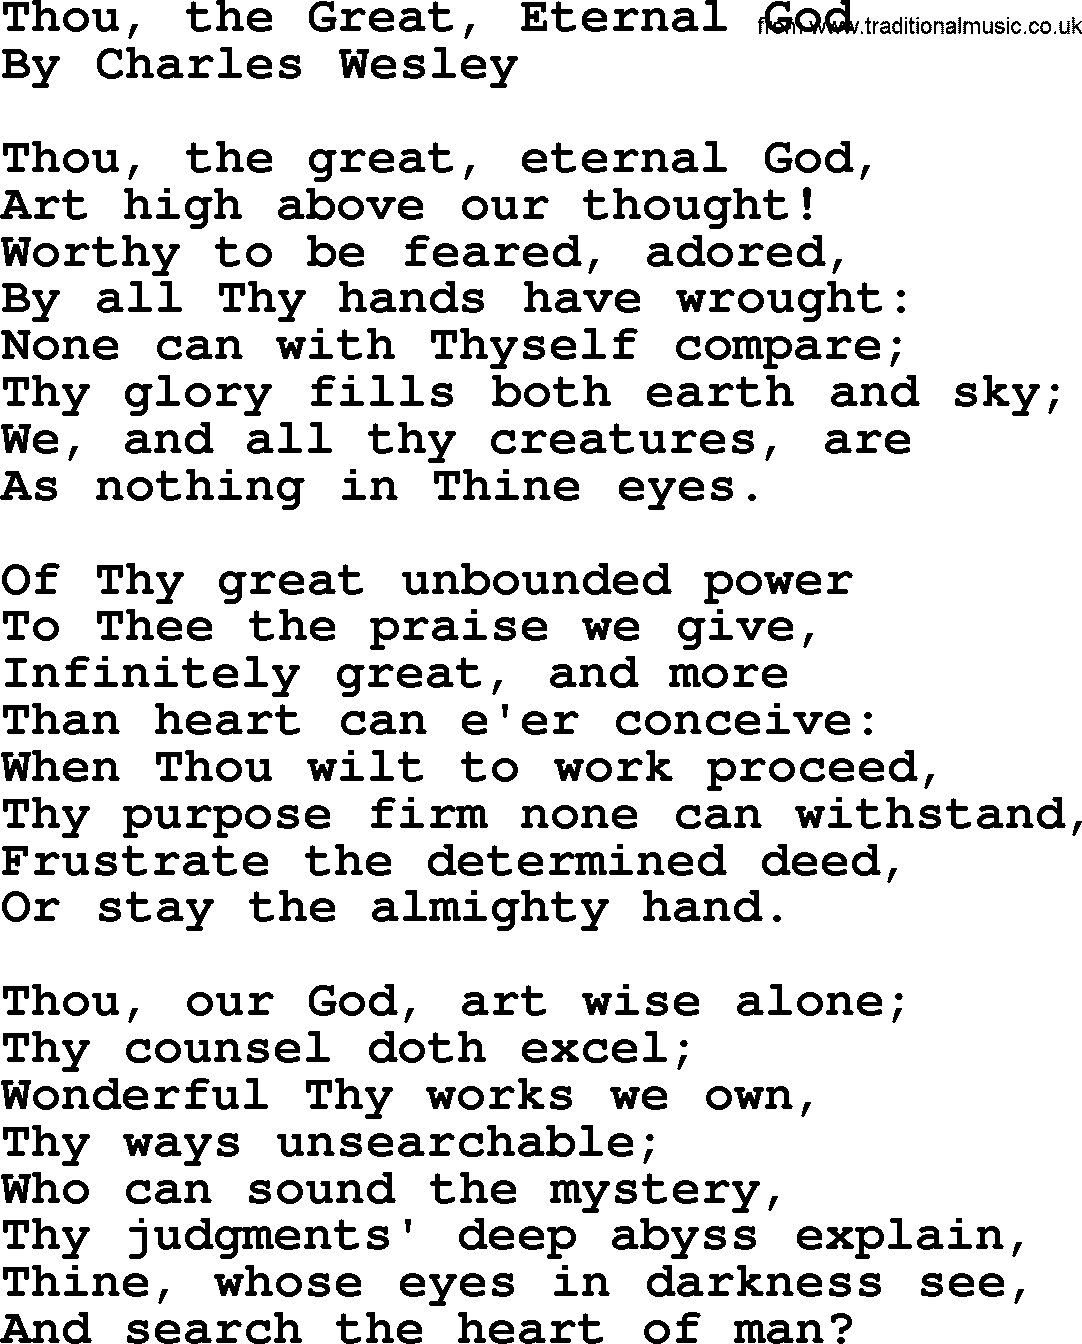 Charles Wesley hymn: Thou, the Great, Eternal God, lyrics